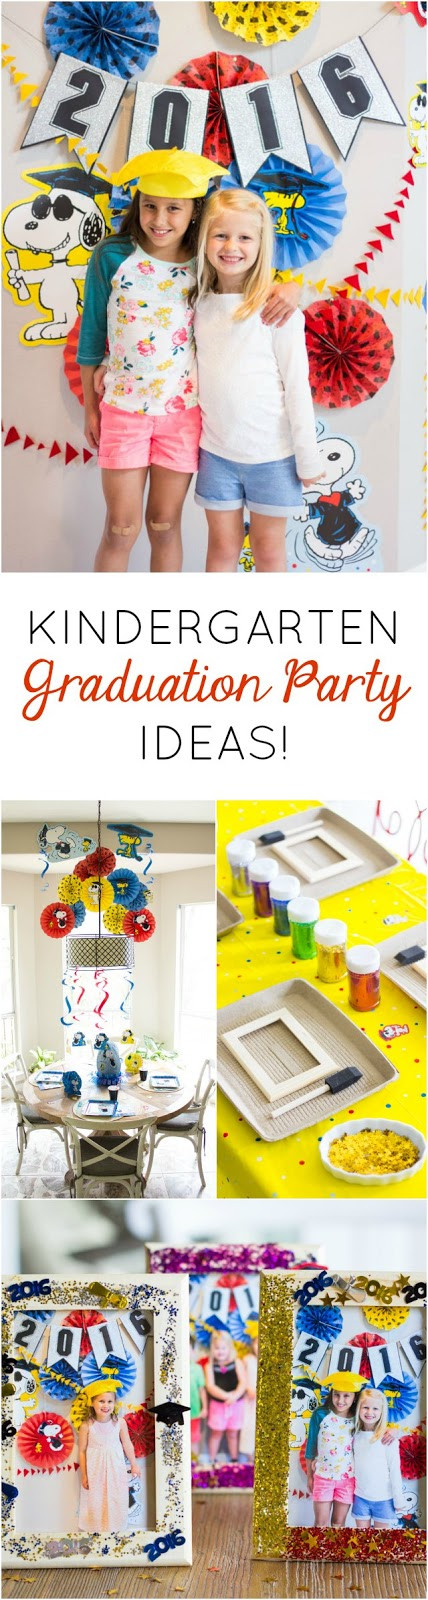 Pre Kindergarten Graduation Party Ideas
 Host a Kindergarten Graduation Playdate